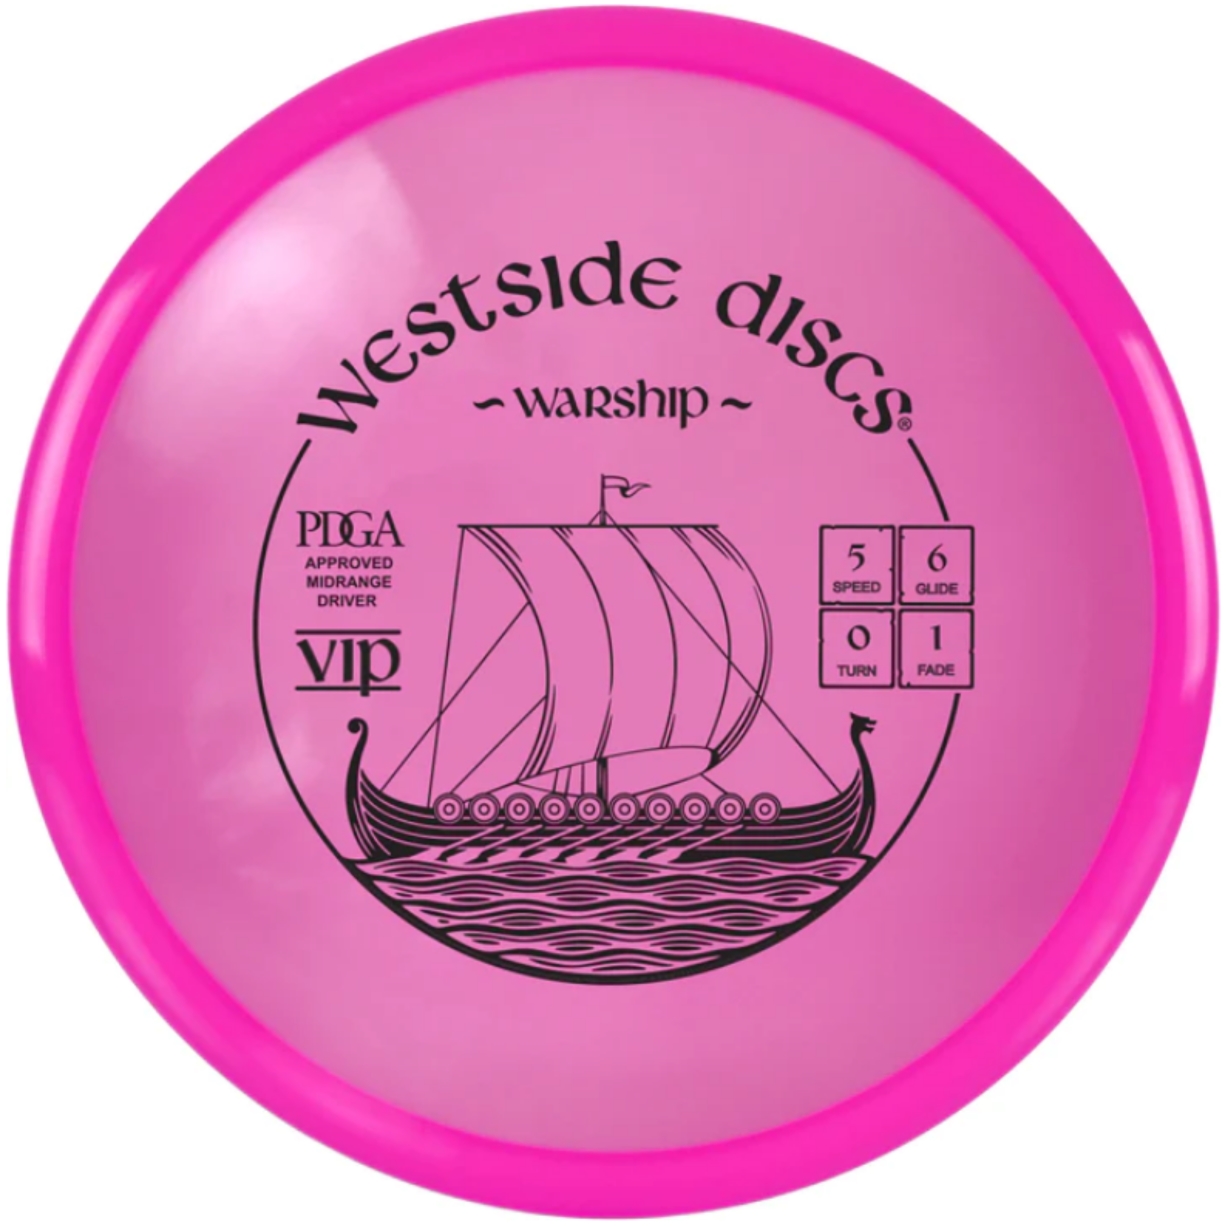 Westside Discs – VIP Warship Pink (Midrange) | Discgolf